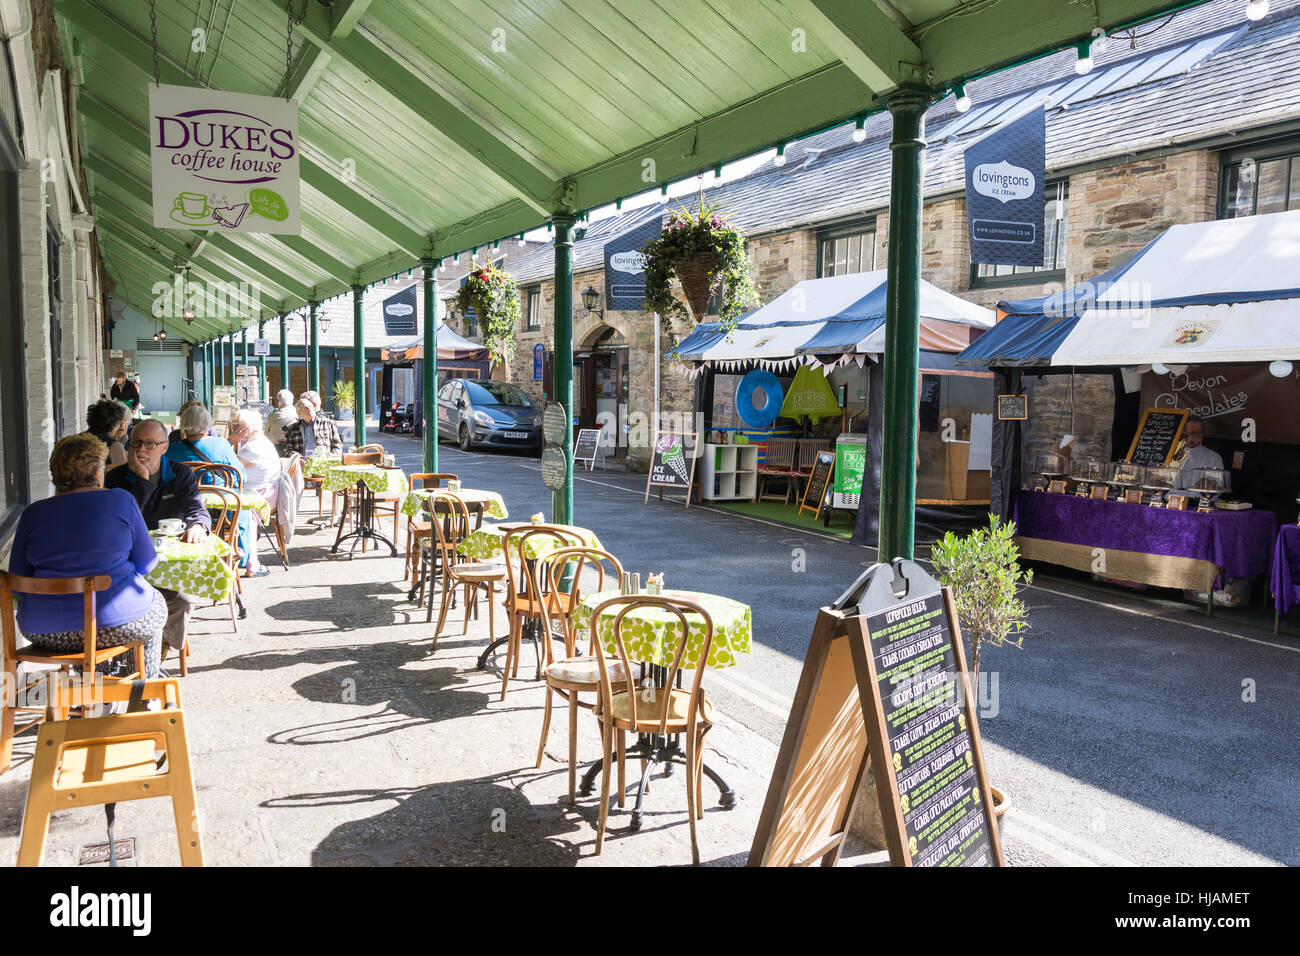 Duke's Coffee House in Tavistock Pannier Market, Tavistock, Devon, England, United Kingdom Stock Photo